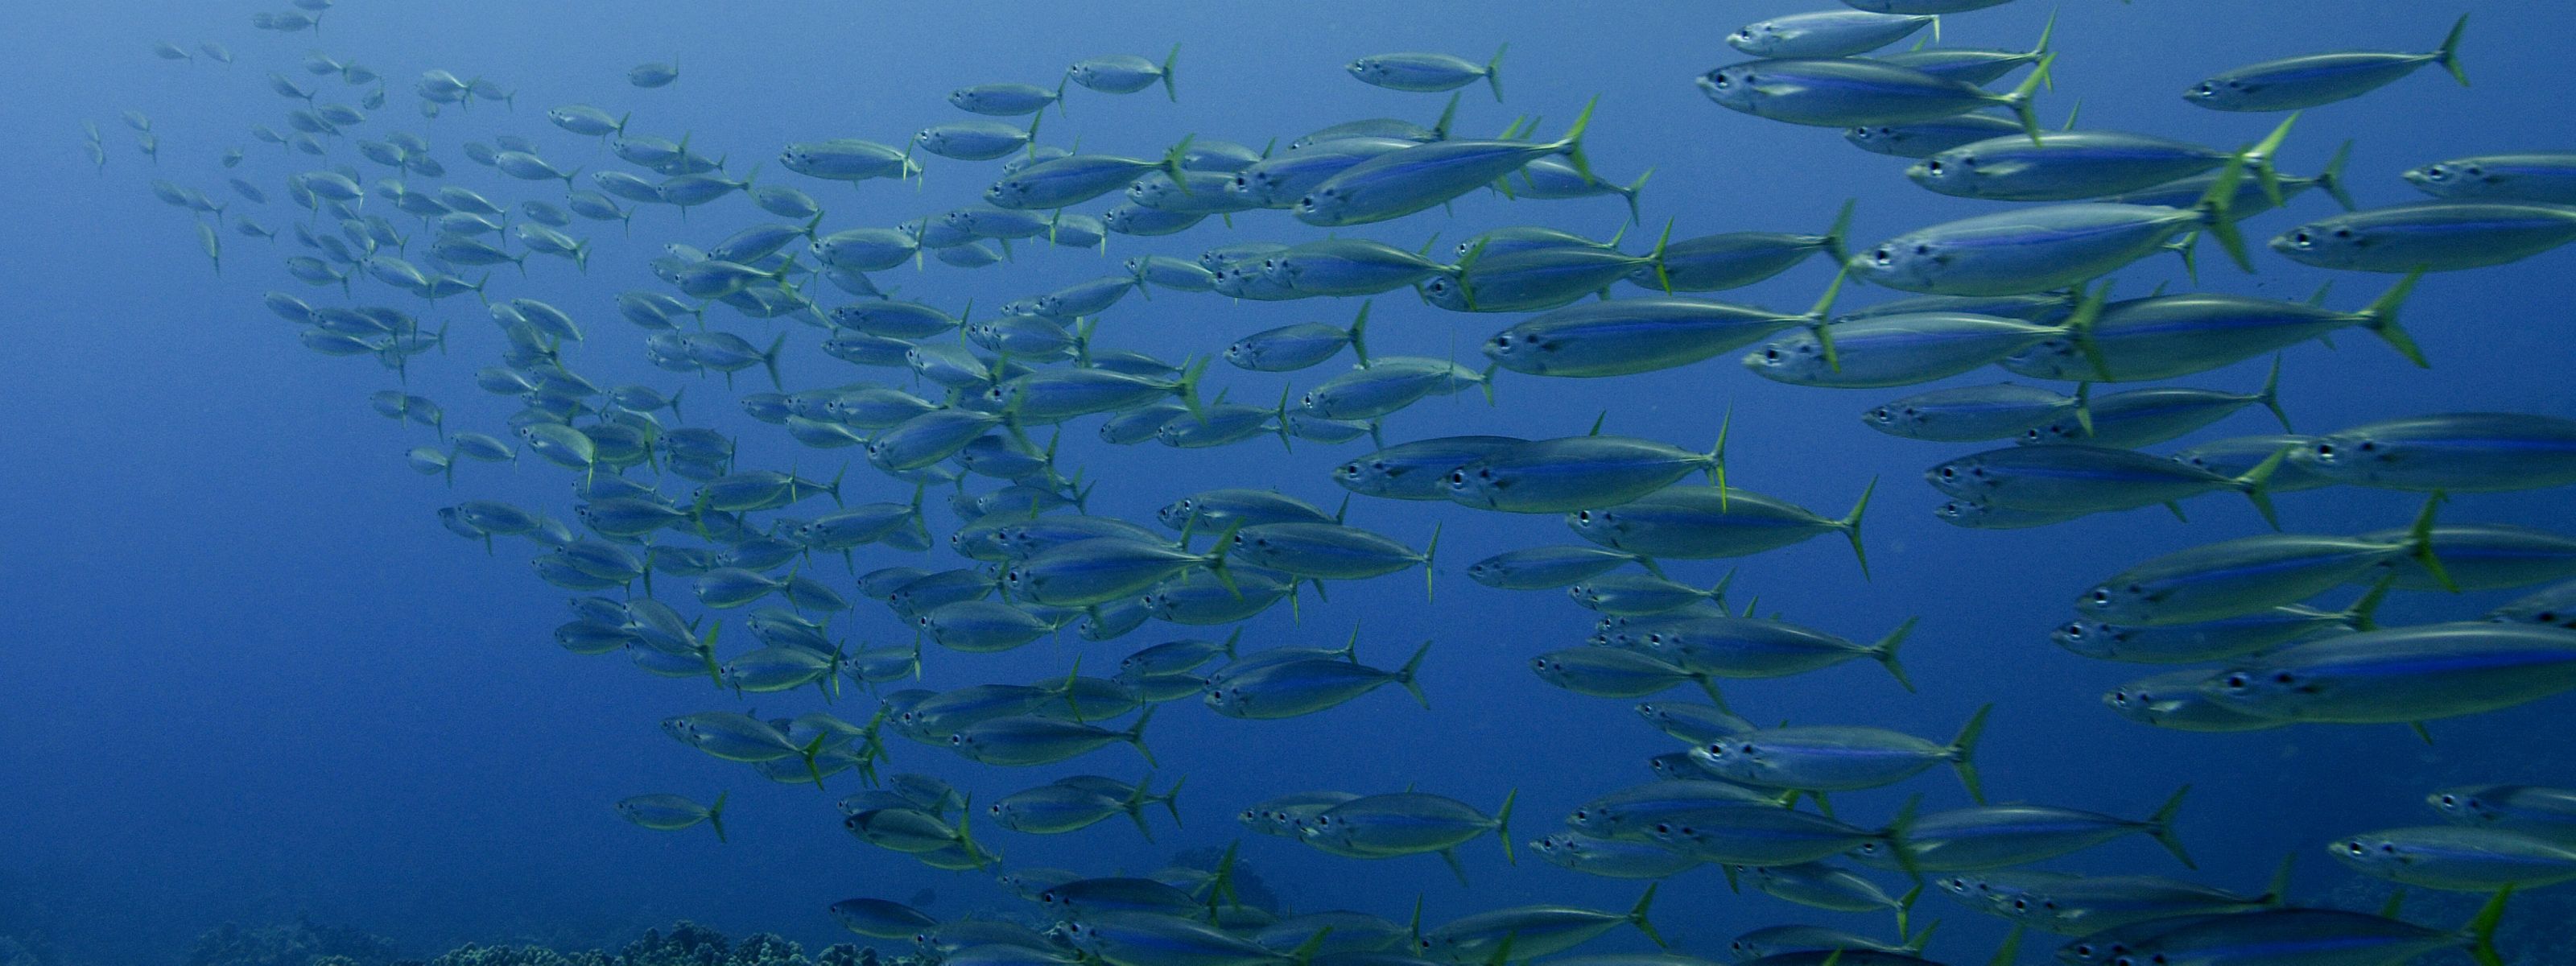 A school of opelu fish swimming in the waters of Hawaii.